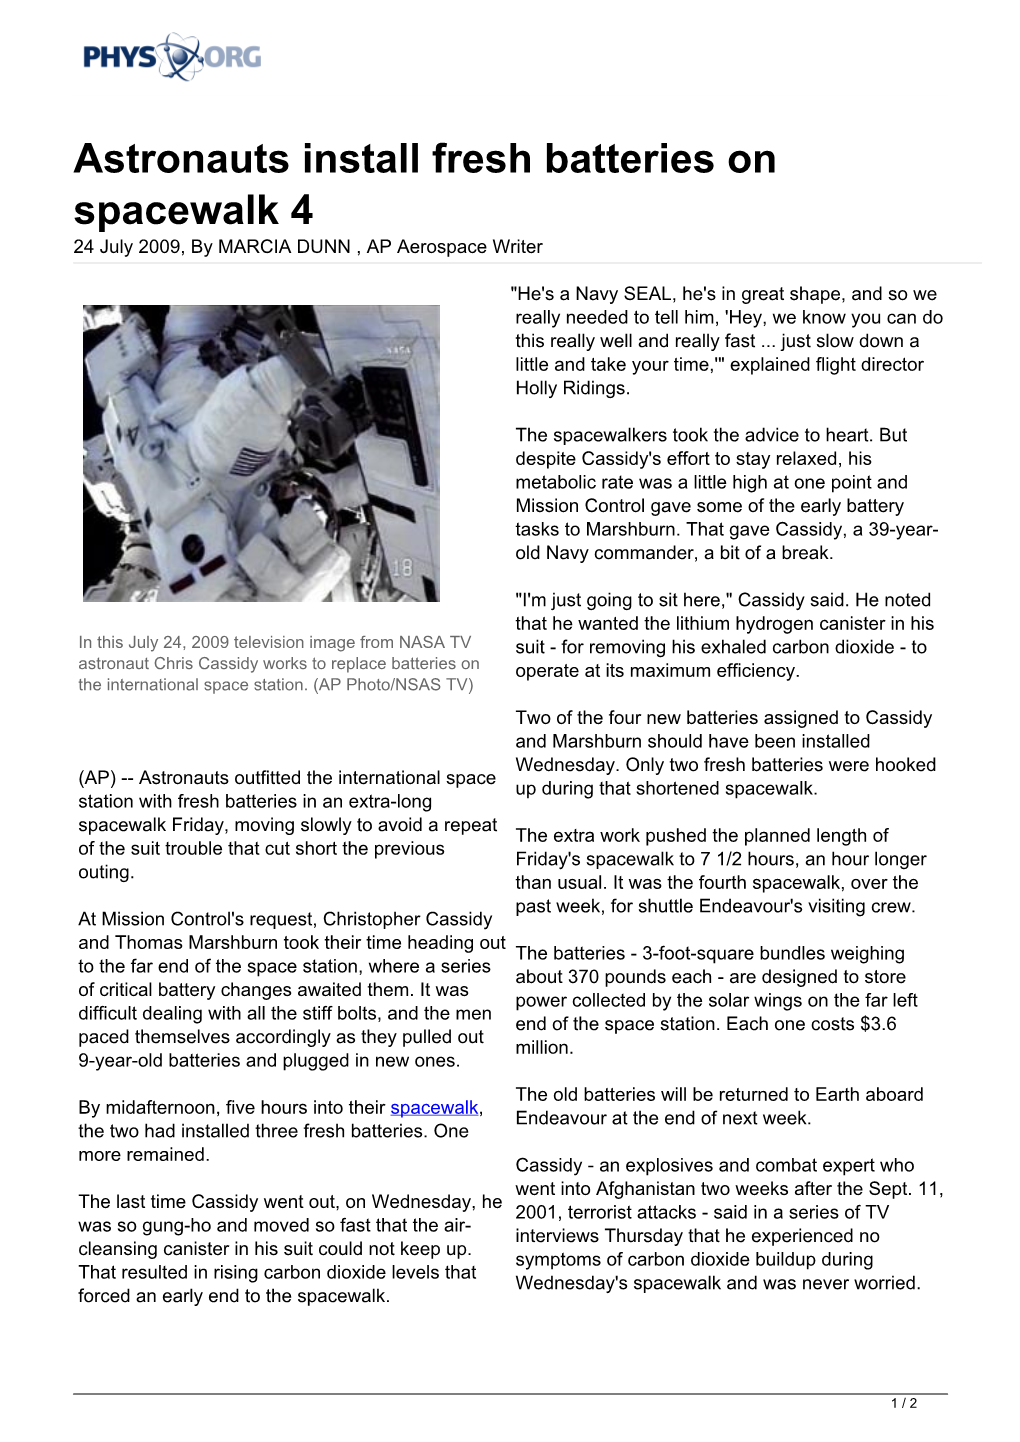 Astronauts Install Fresh Batteries on Spacewalk 4 24 July 2009, by MARCIA DUNN , AP Aerospace Writer